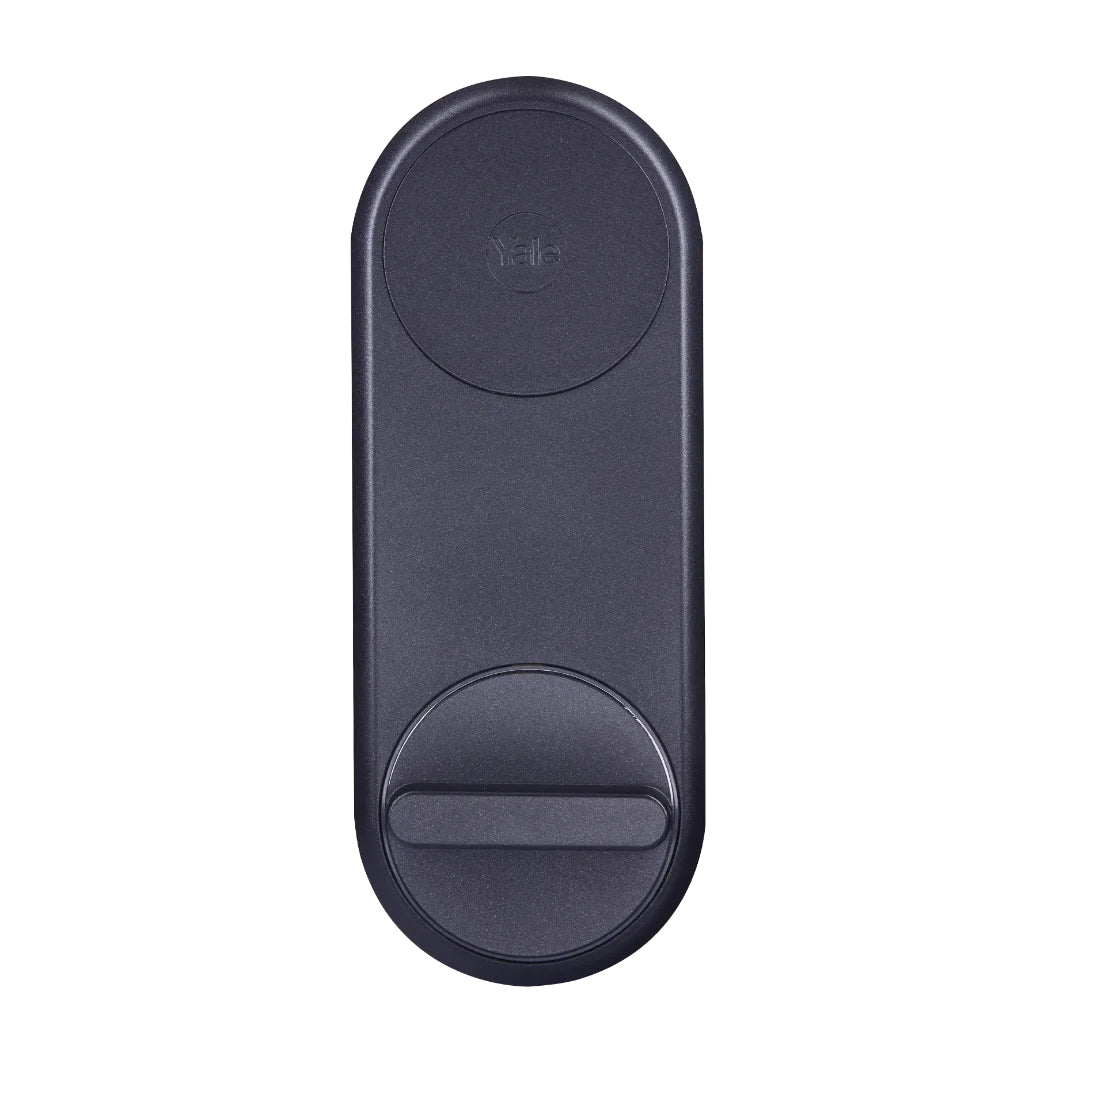 Yale Linus Smart Door Lock - Matte Black - قفل ذكي - Store 974 | ستور ٩٧٤